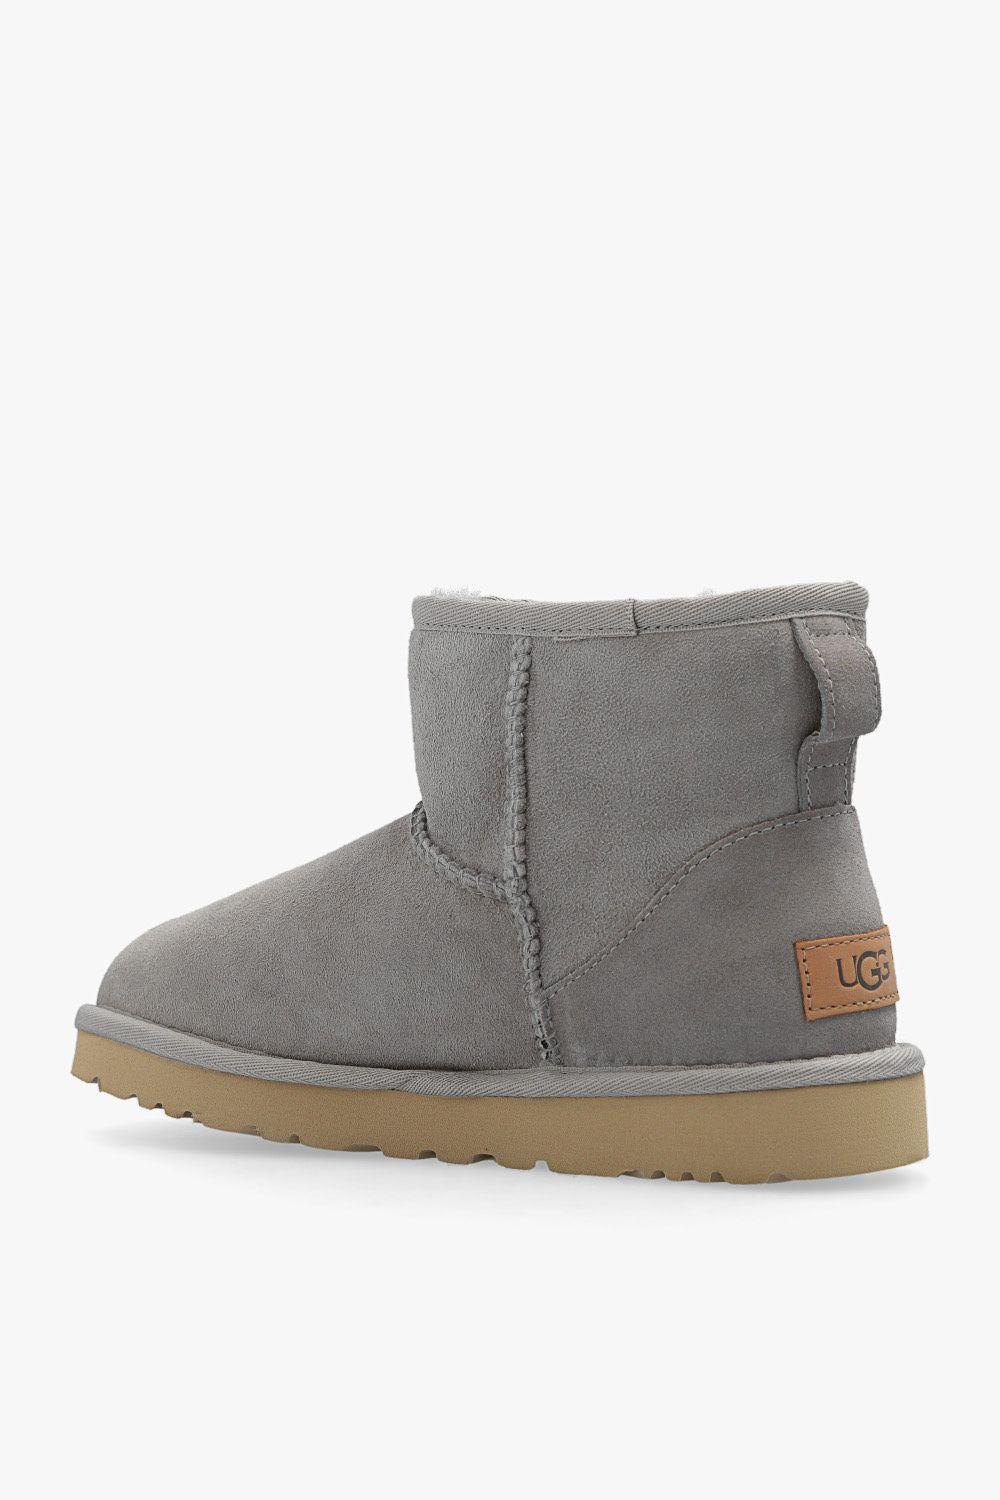 UGG 'classic Mini Ii' Snow Boots in Gray | Lyst